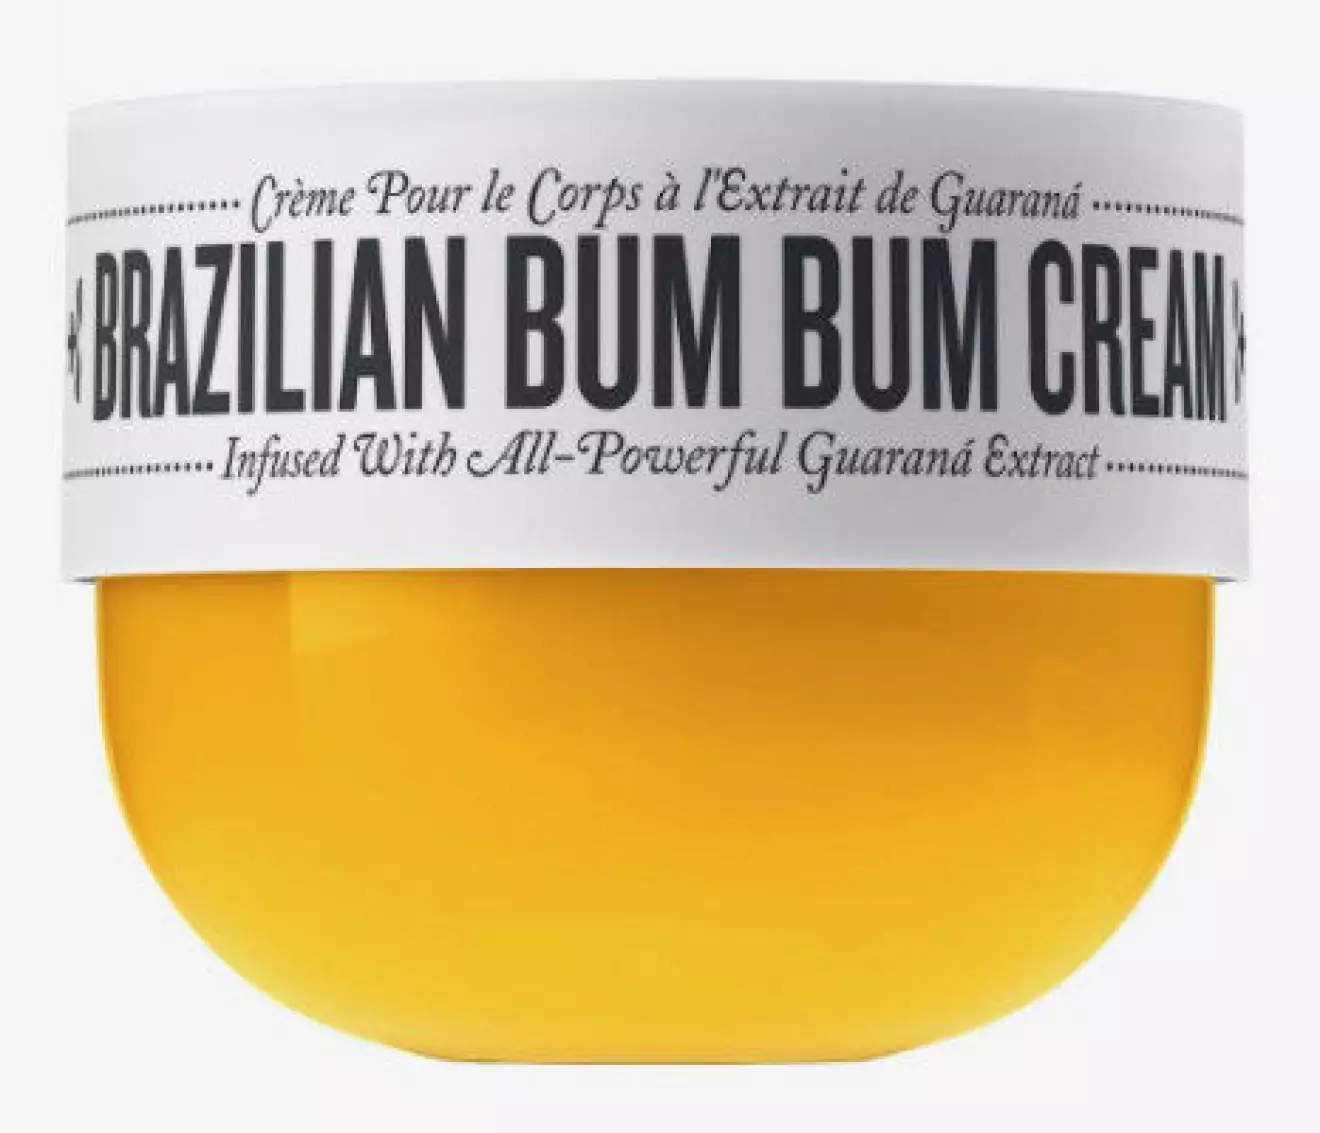 Brazilian Bum Bum crème